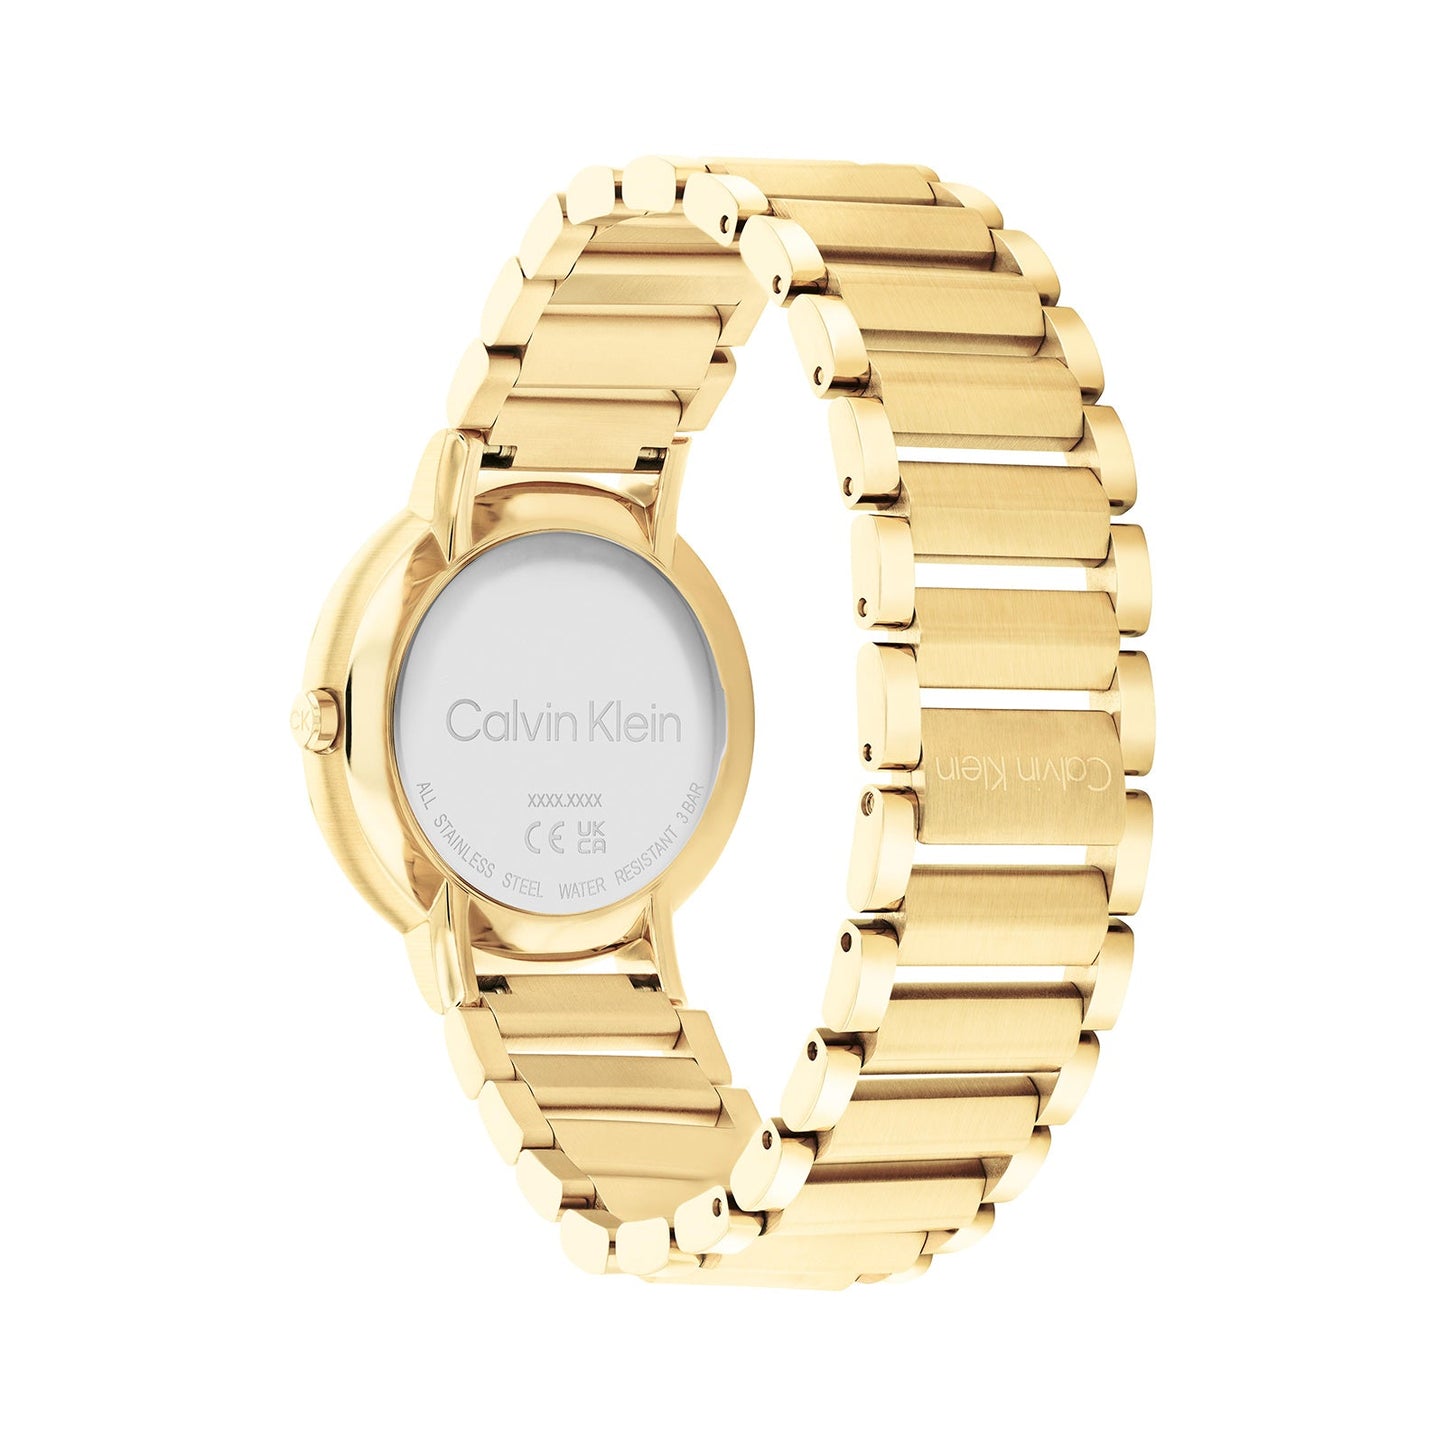 Calvin Klein 25200086 Women's Steel Watch